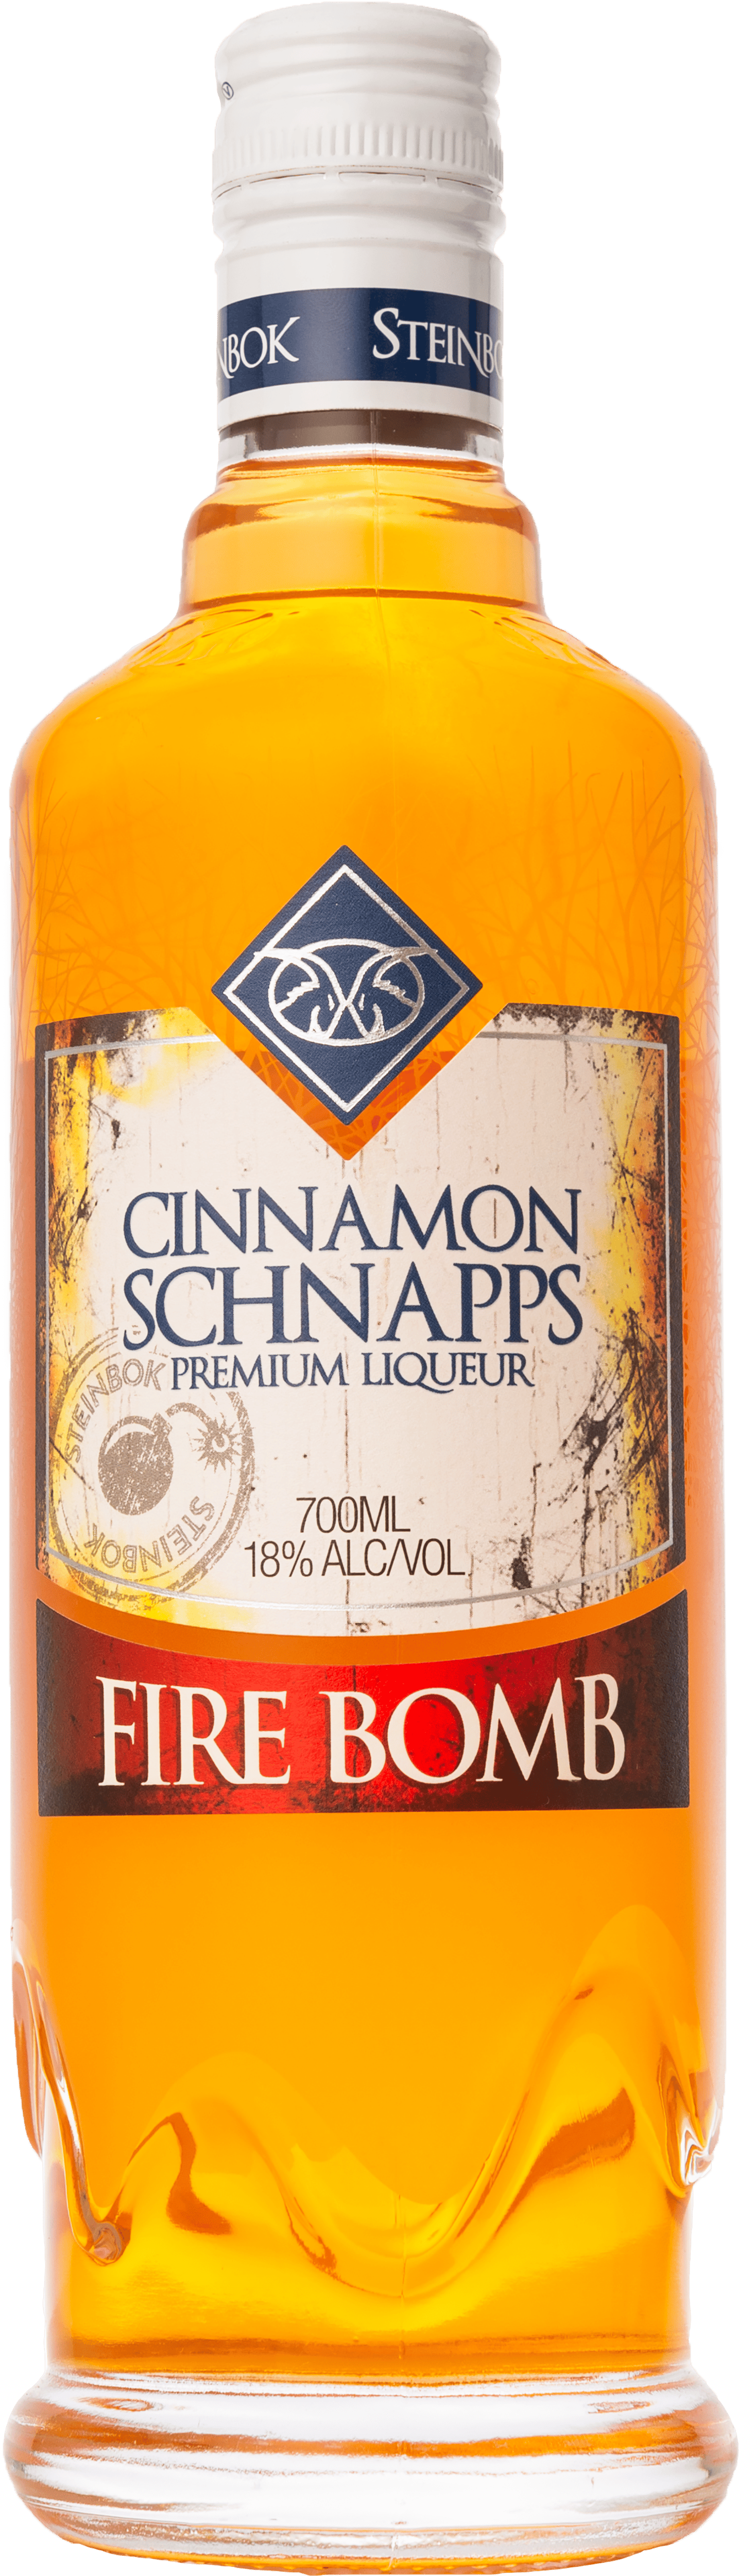 Cinnamon Schnapps